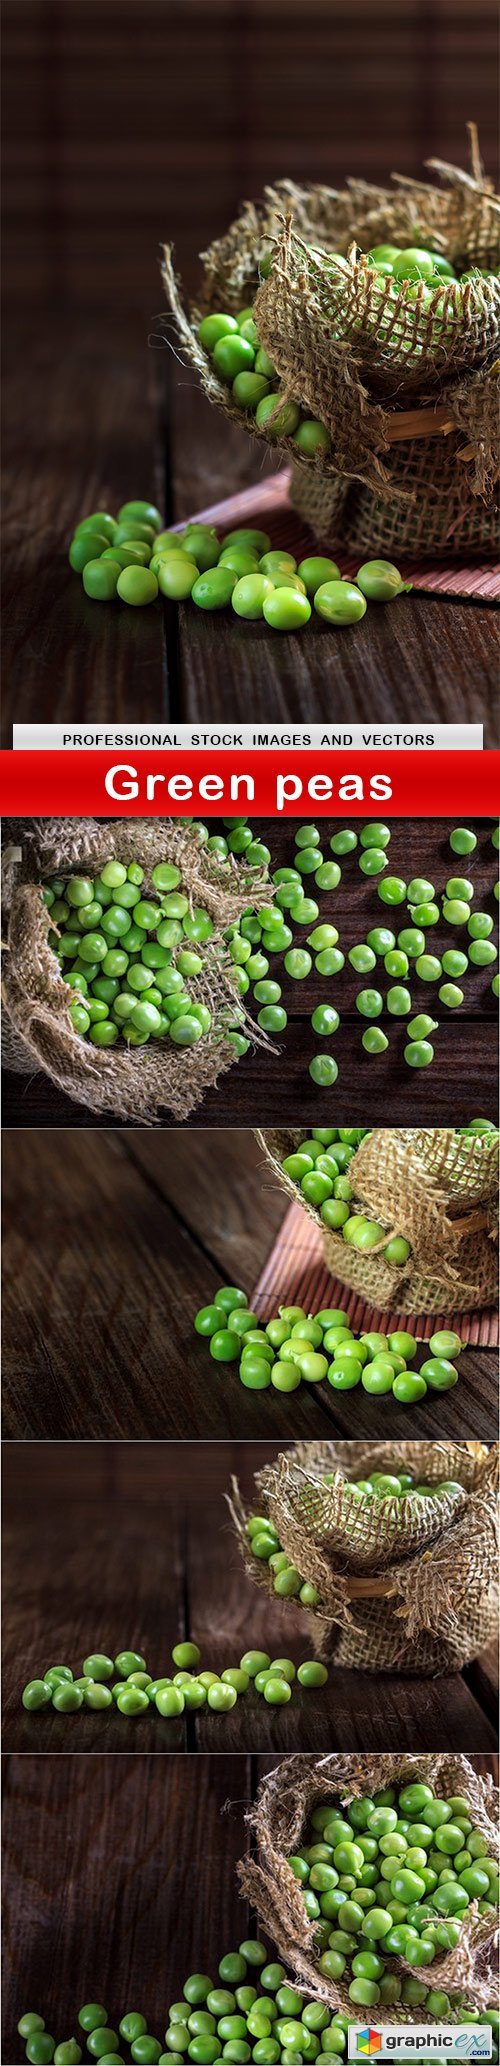 Green peas - 5 UHQ JPEG